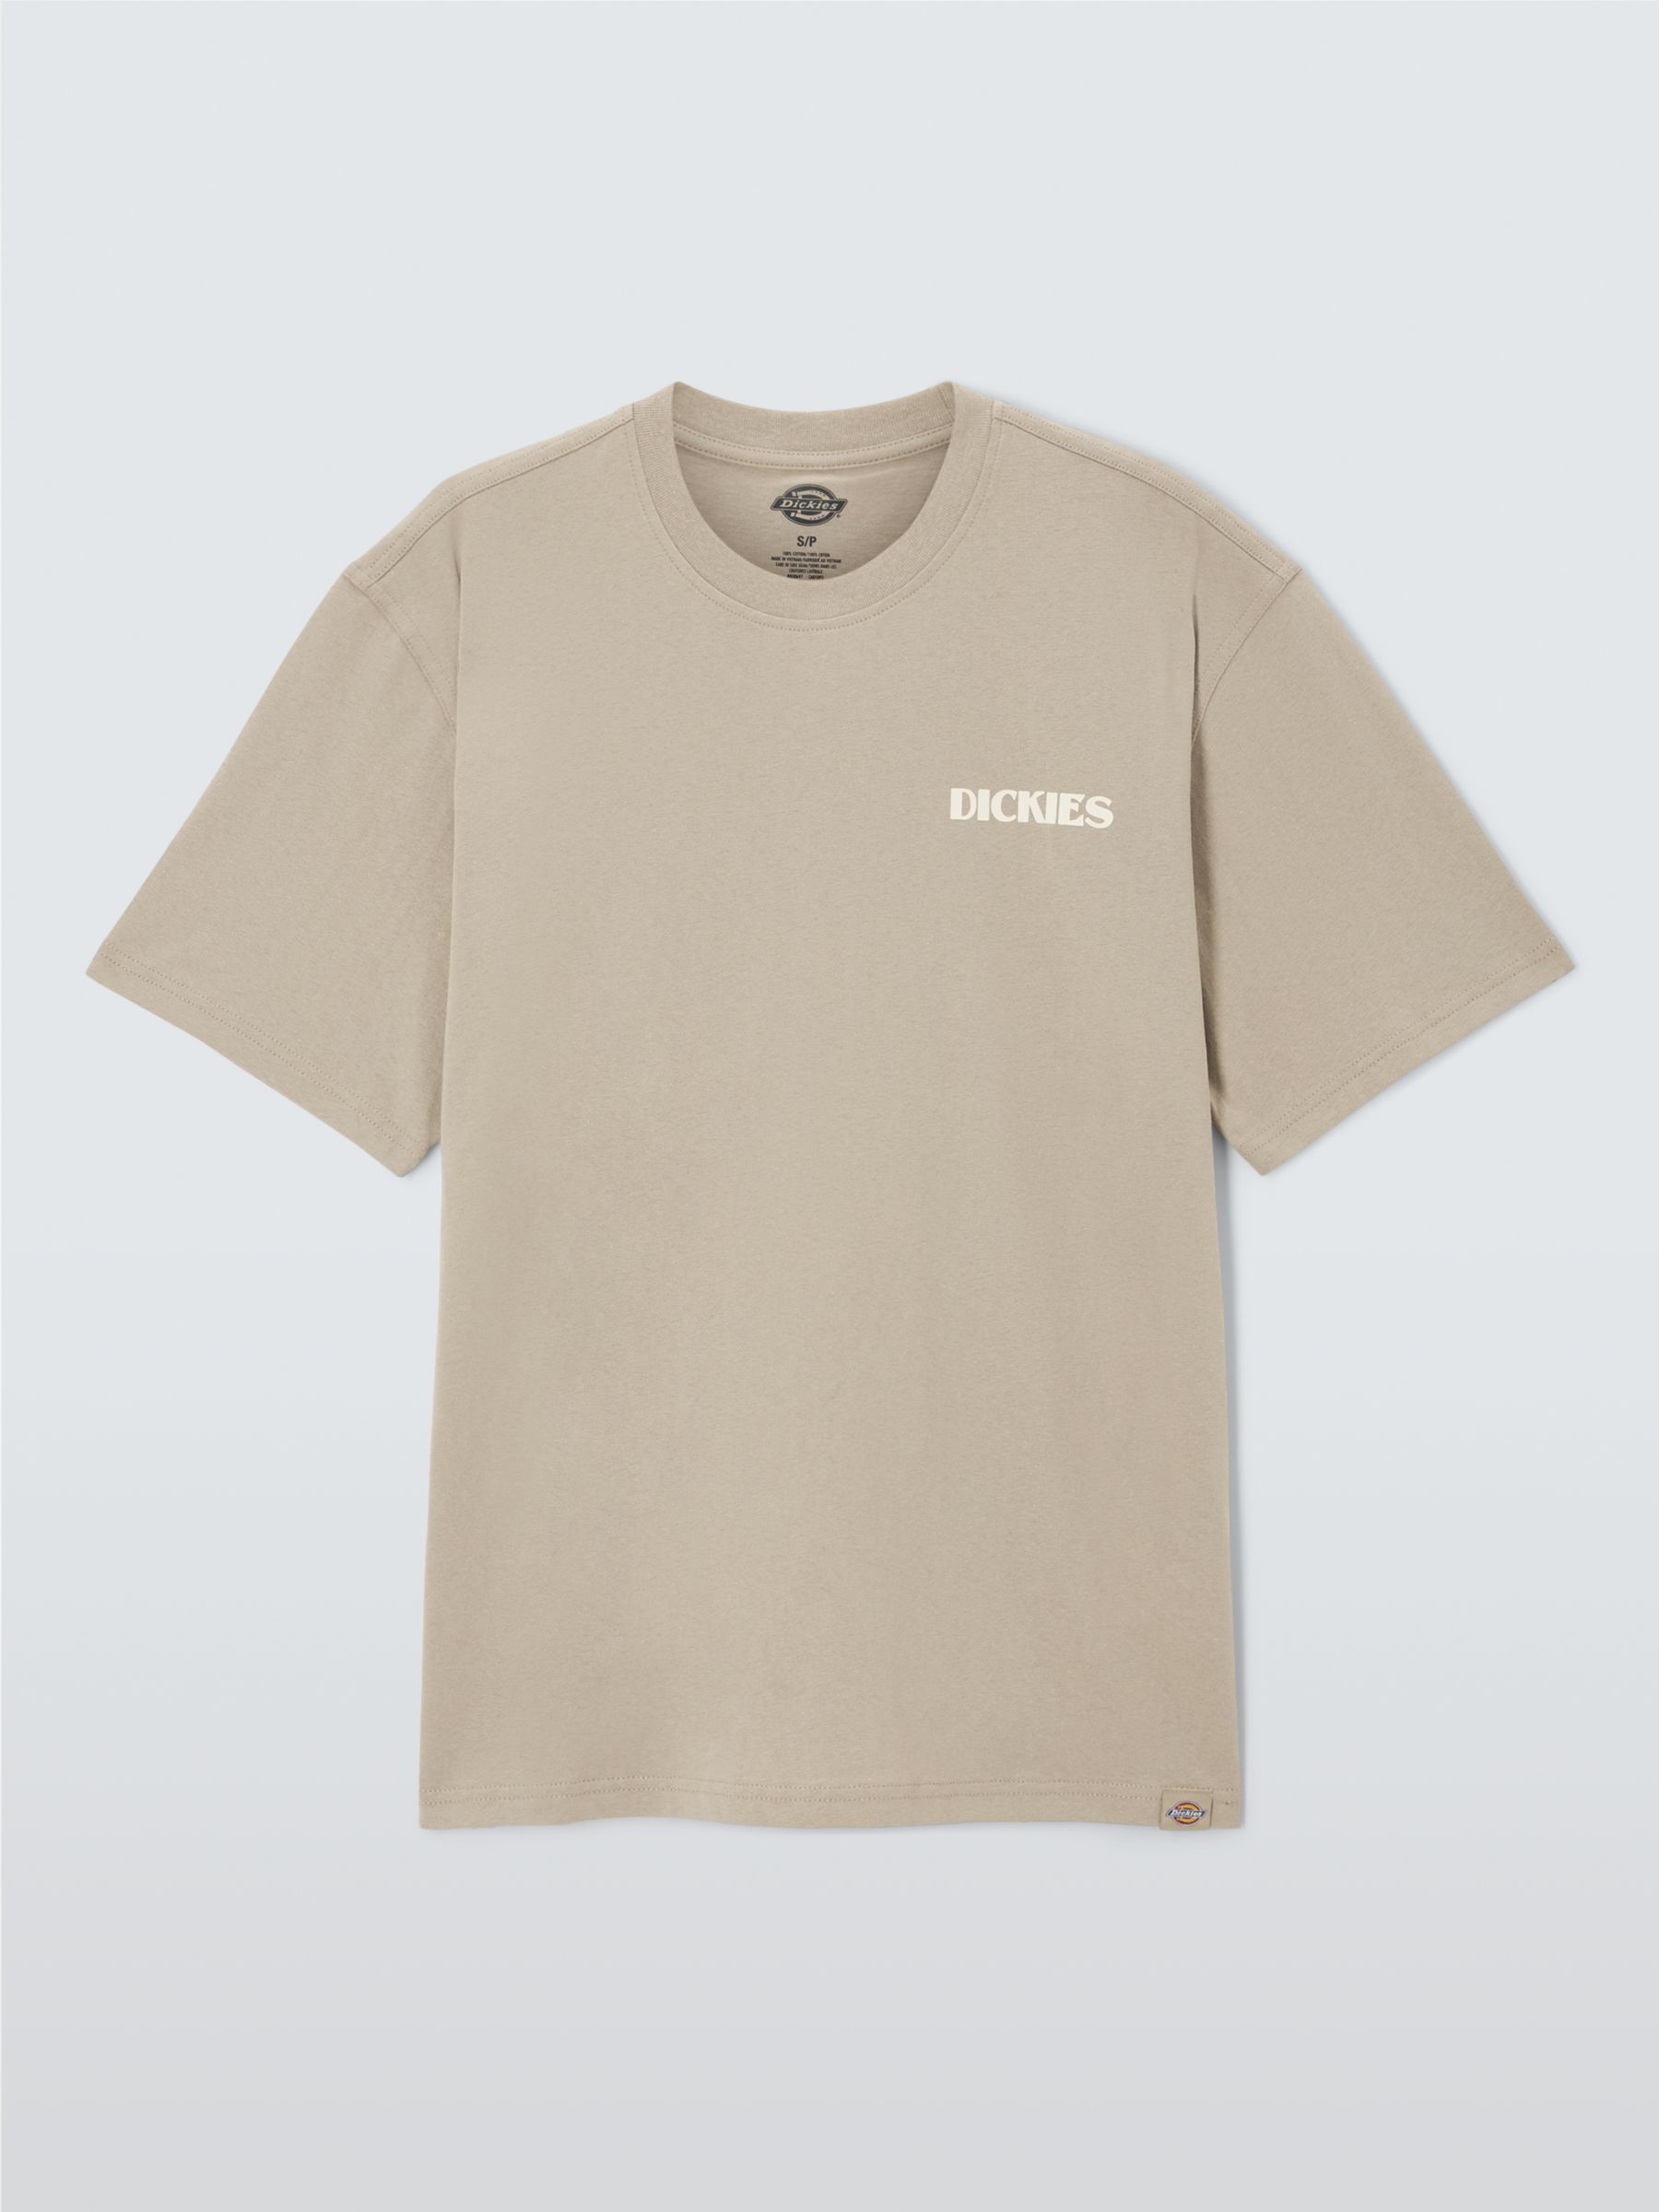 Buy Dickies Herndon Short Sleeve T-Shirt, Sandstone Online at johnlewis.com